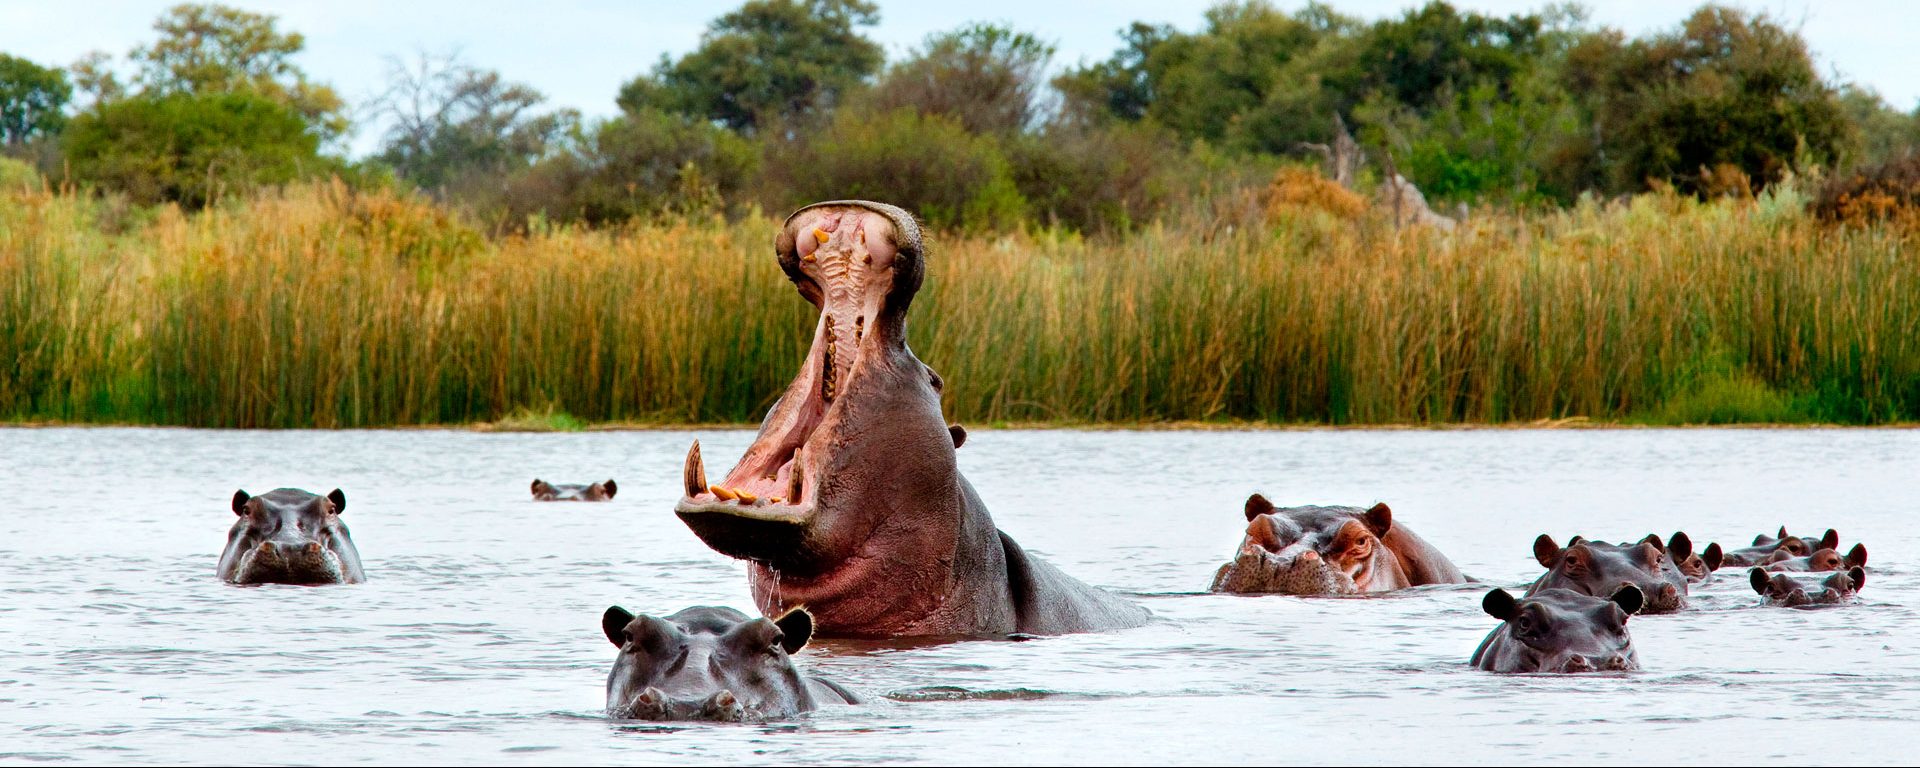 Hippos wading in a river in the Okavango Delta, Botswana